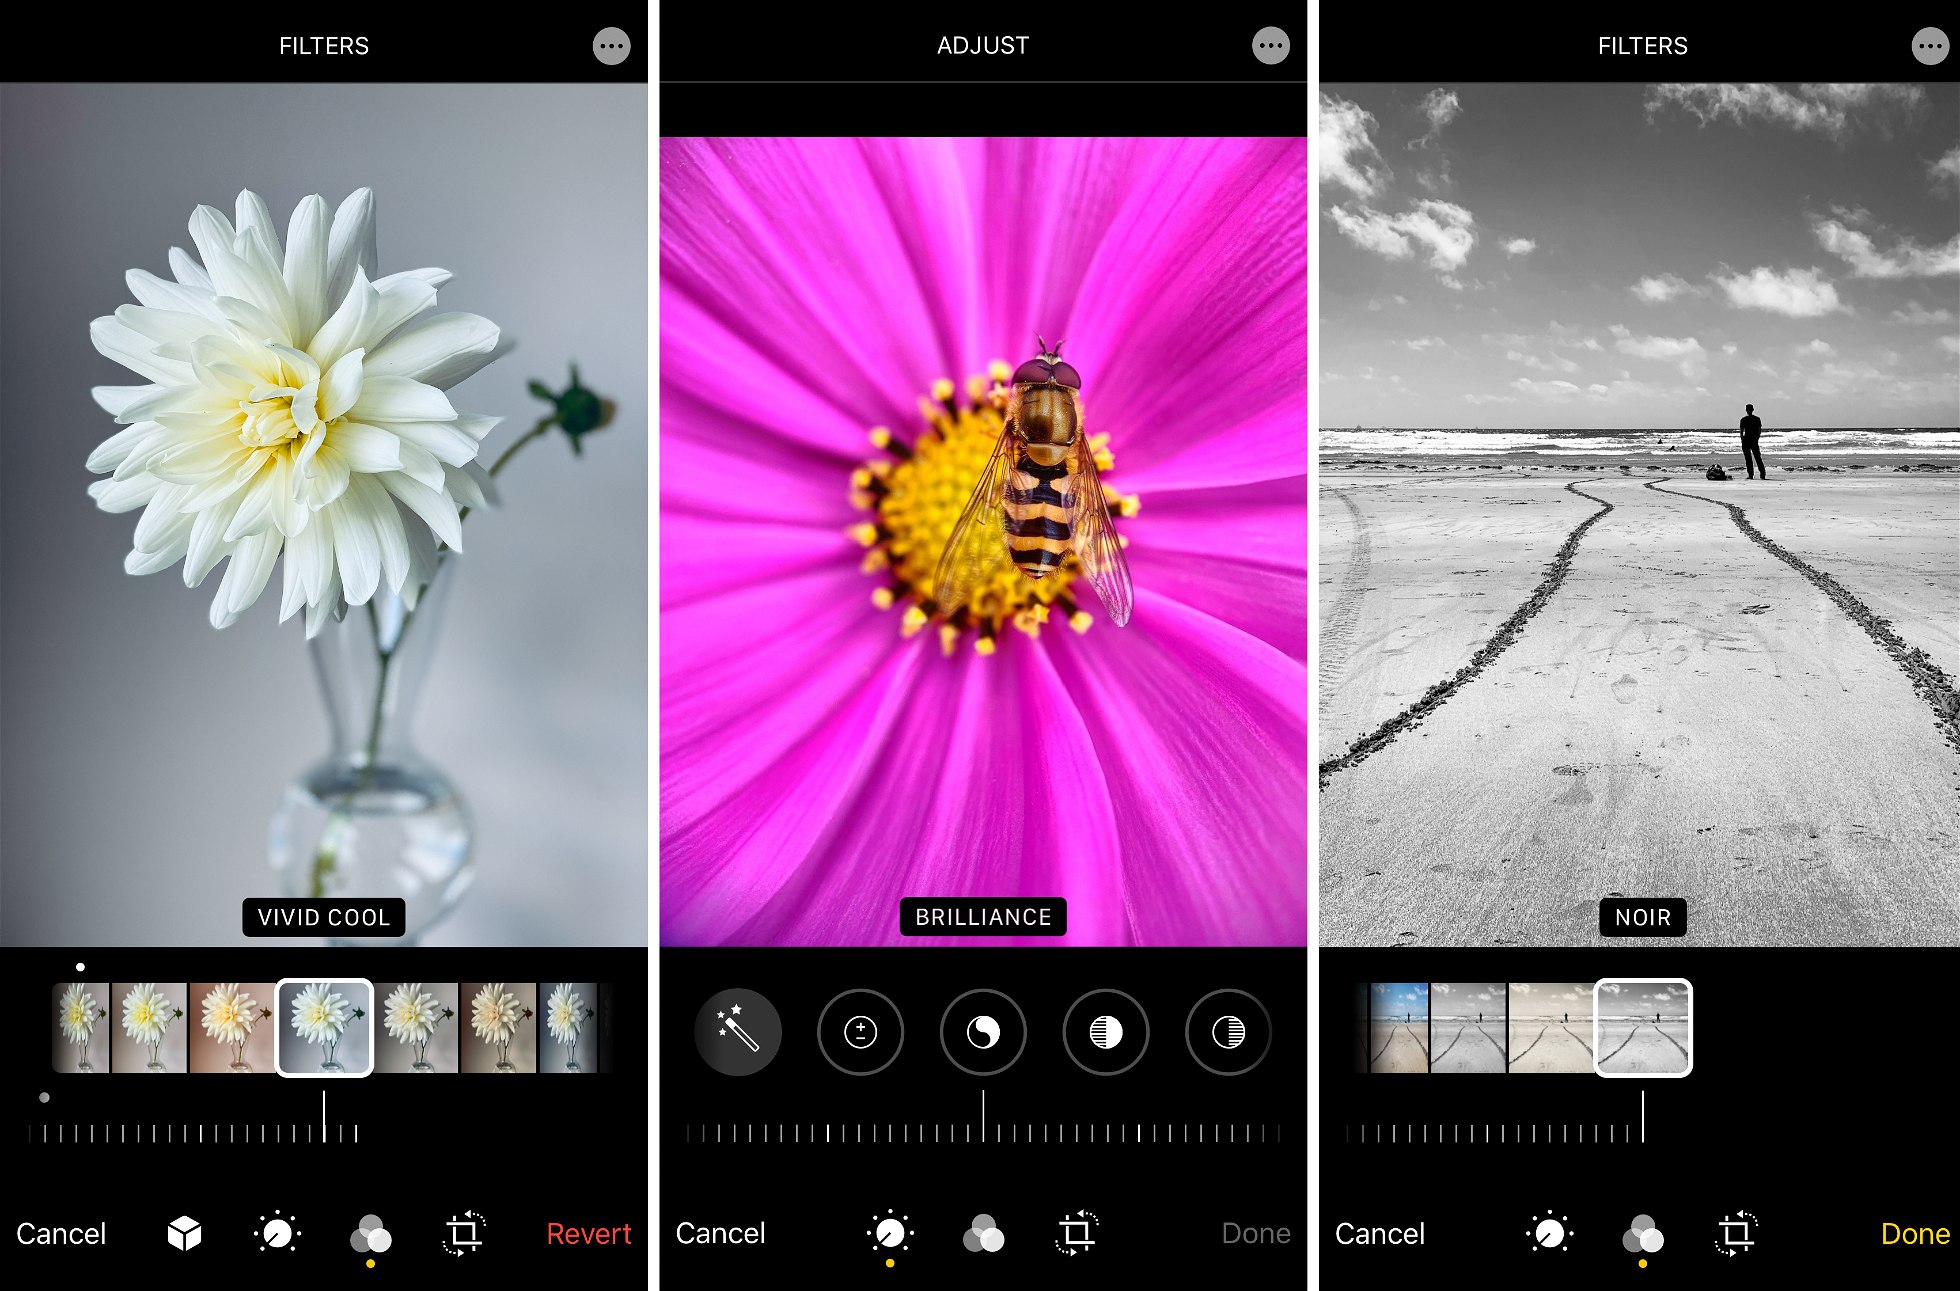 How To Edit Photos On iPhone Using The BuiltIn Photos App